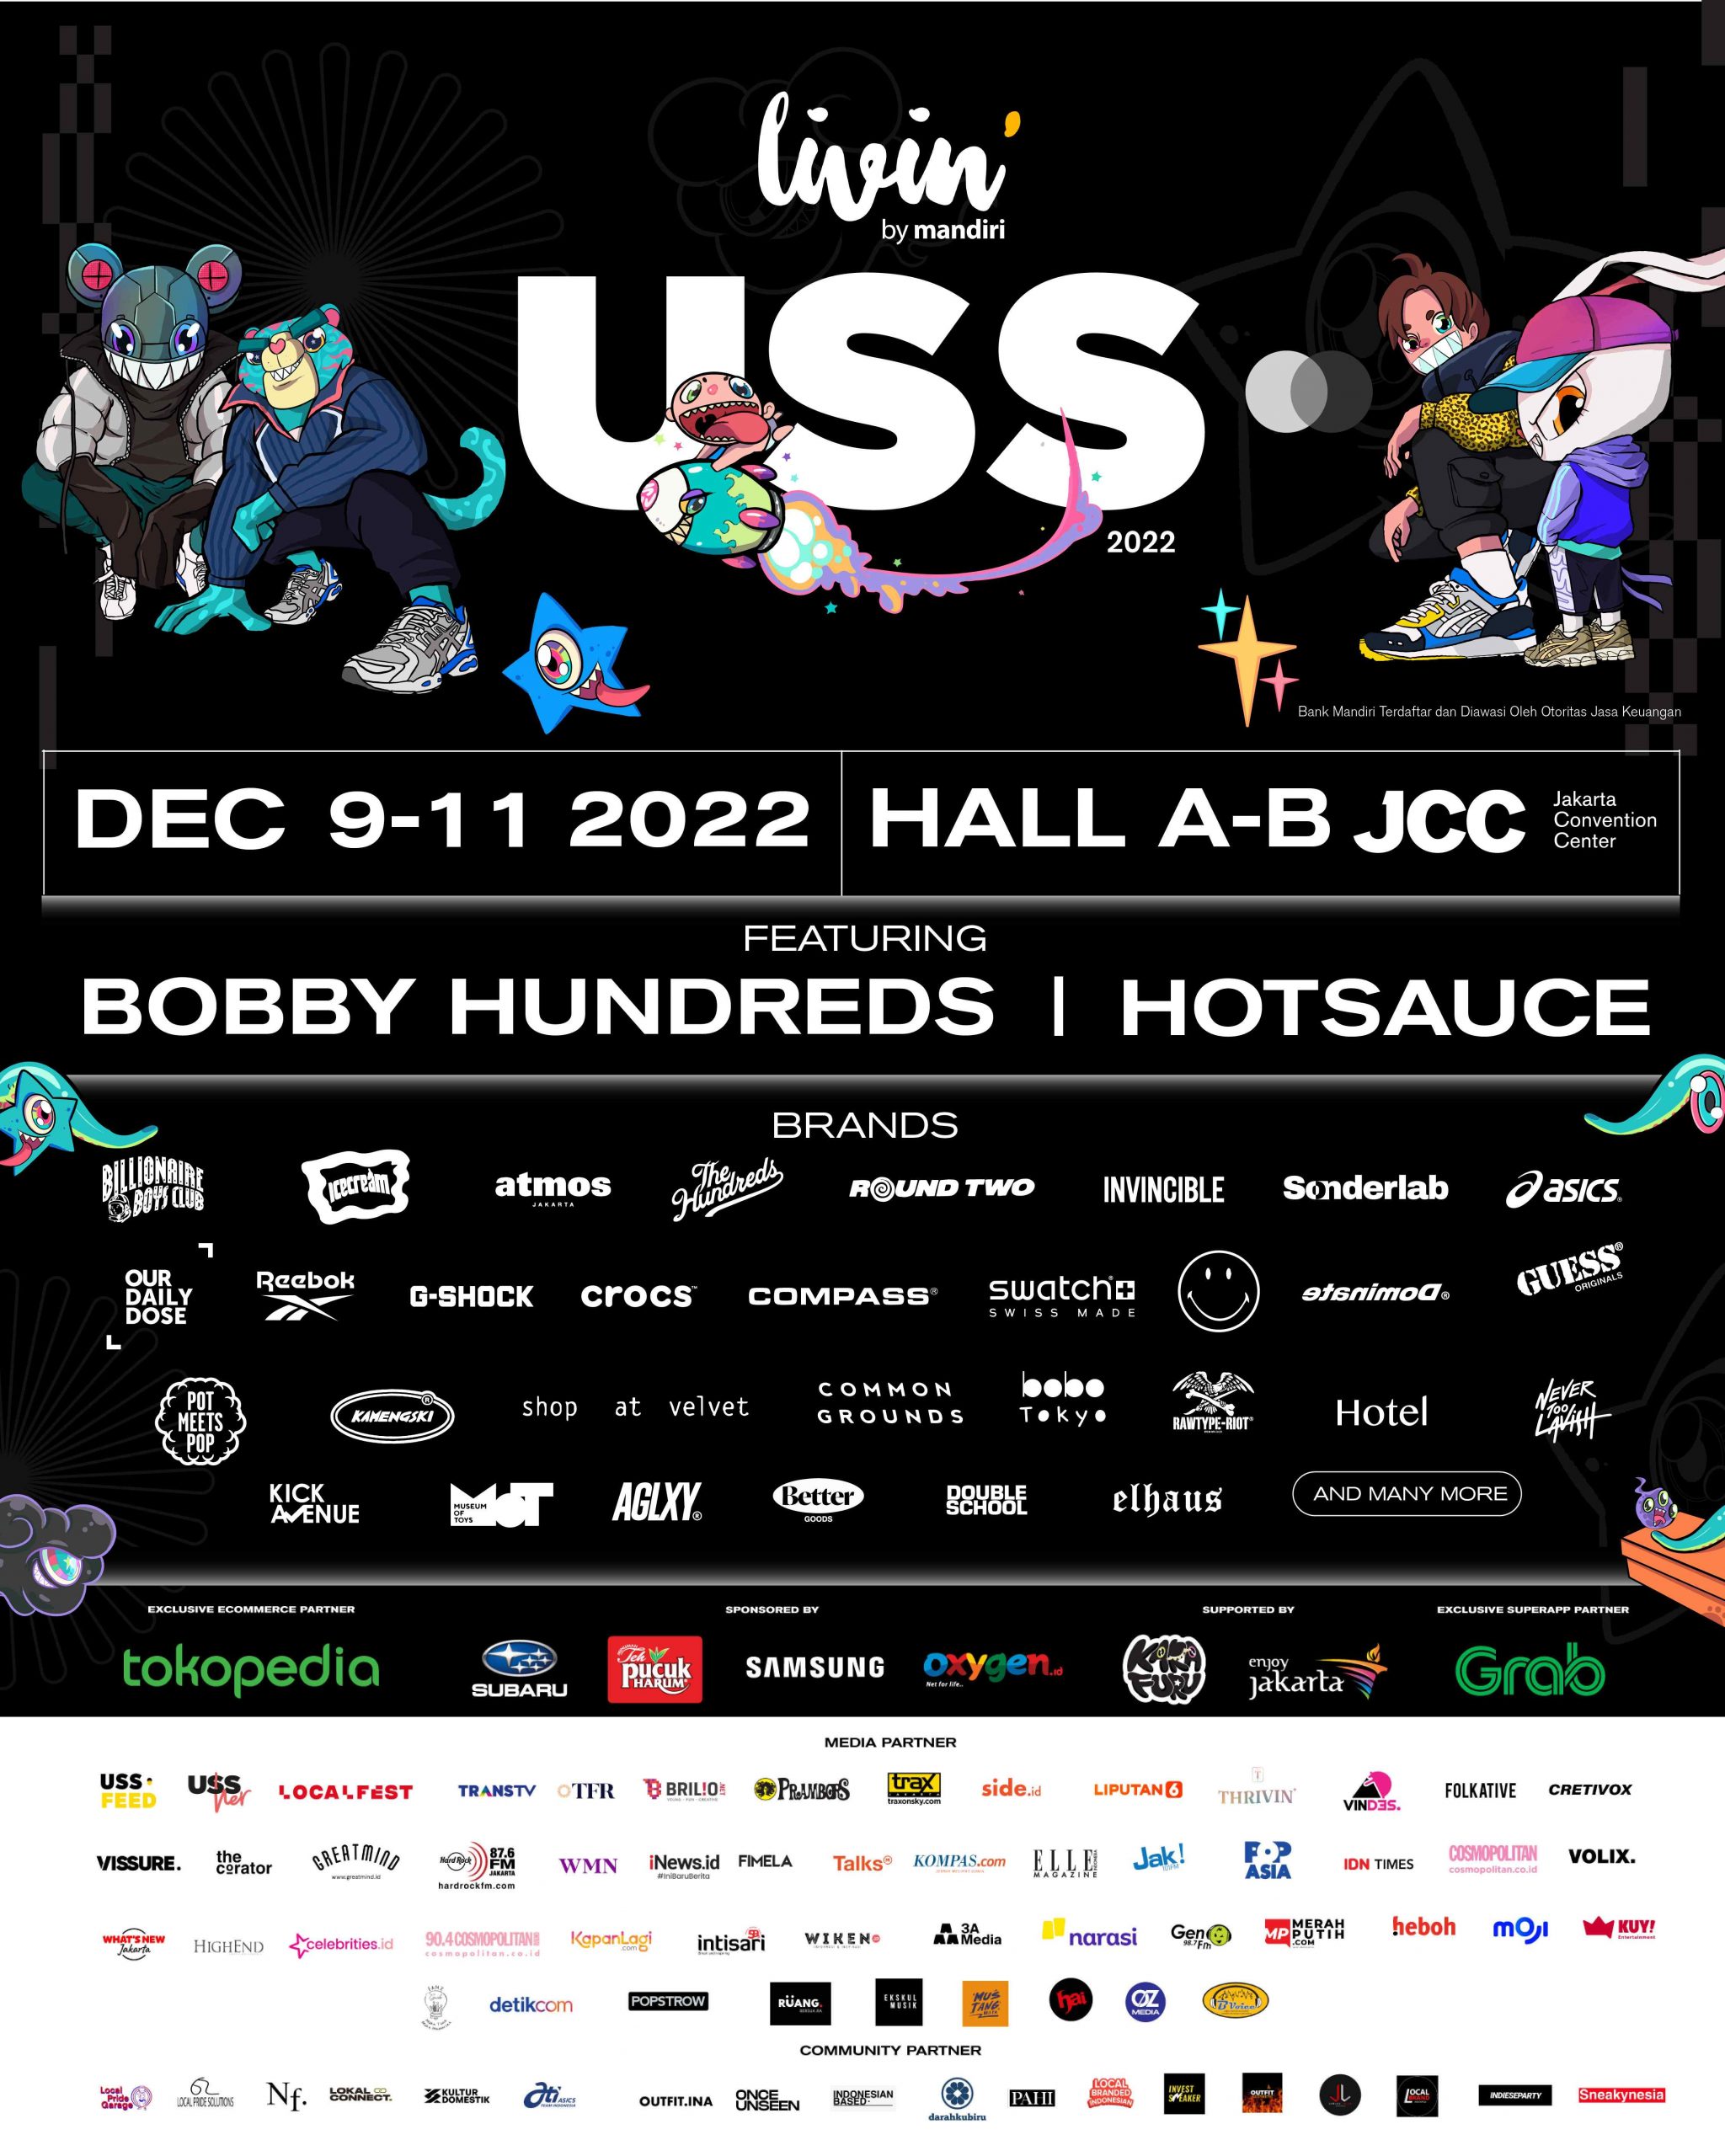 USS (Urban Sneaker Society), event Fashion & Lifestyle 9- 11 Desember 2022 